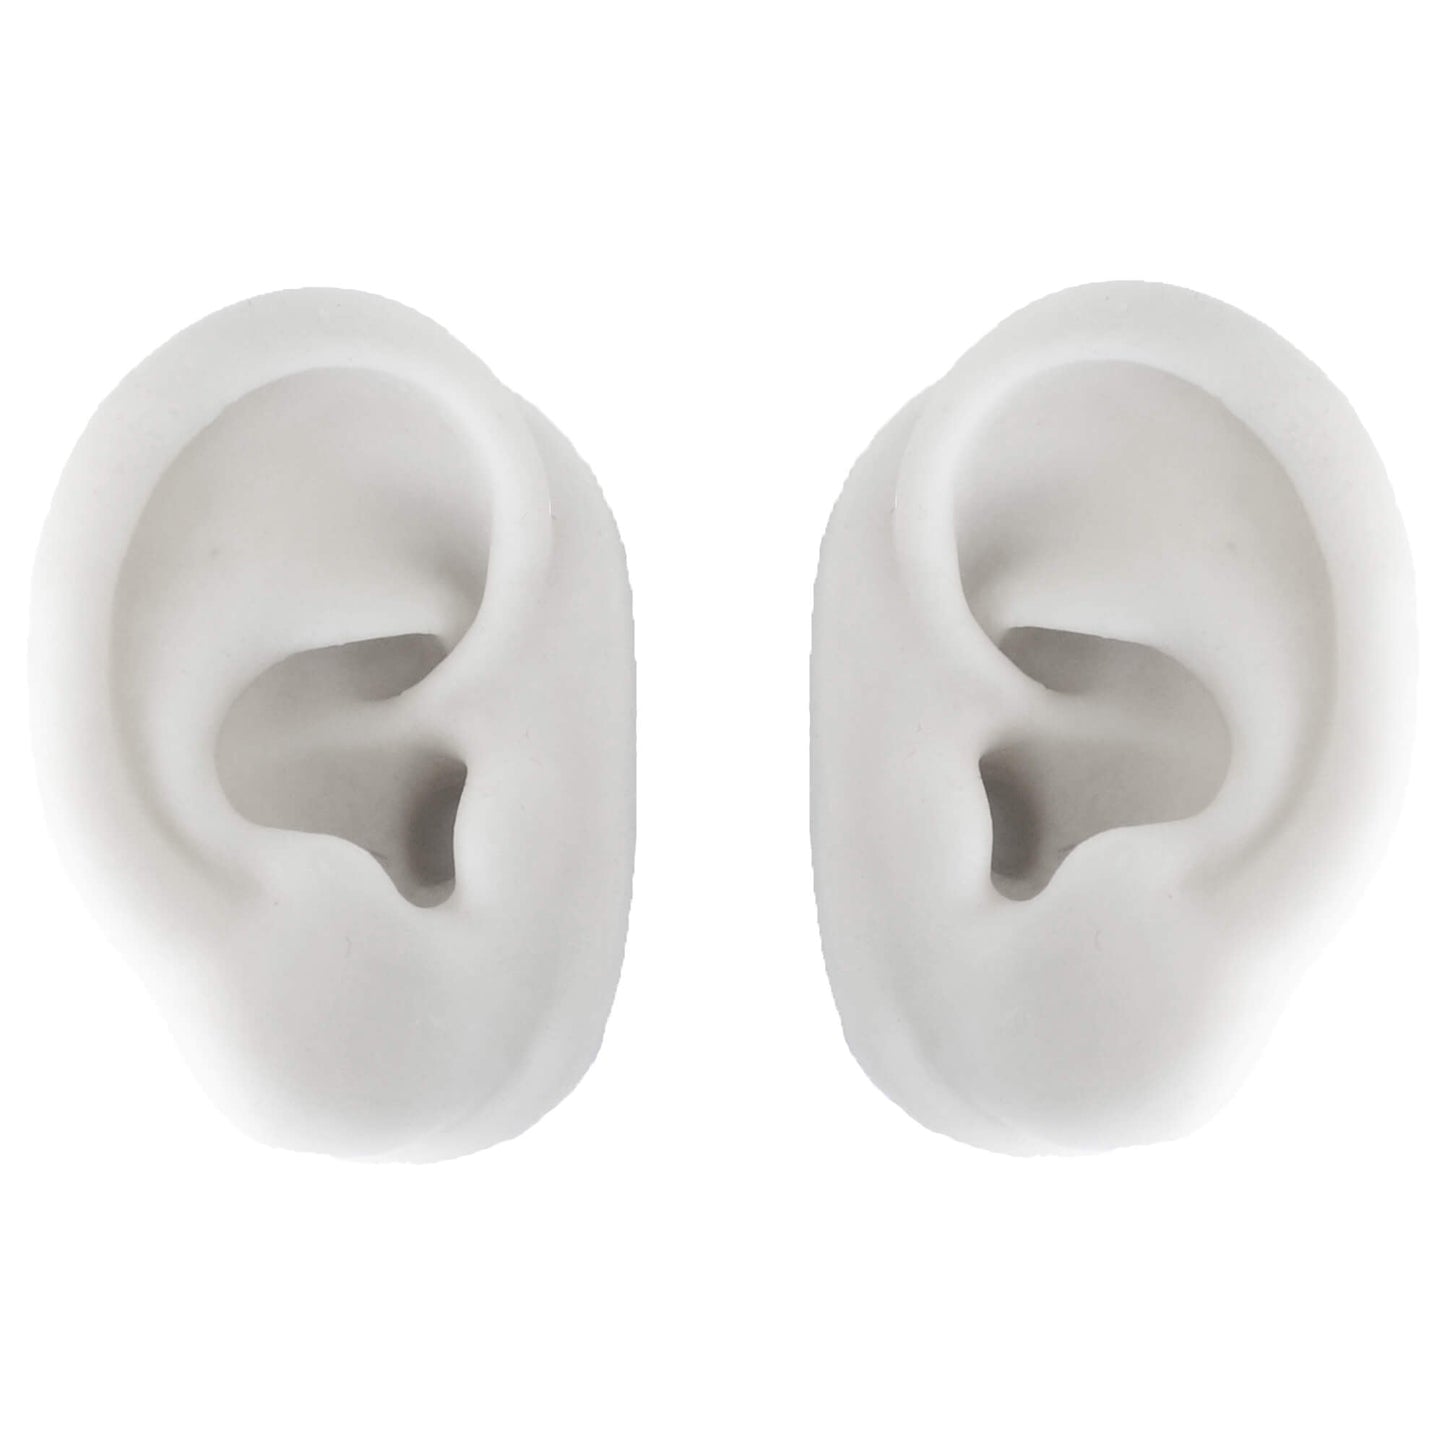 Ear model (pair) silicone white